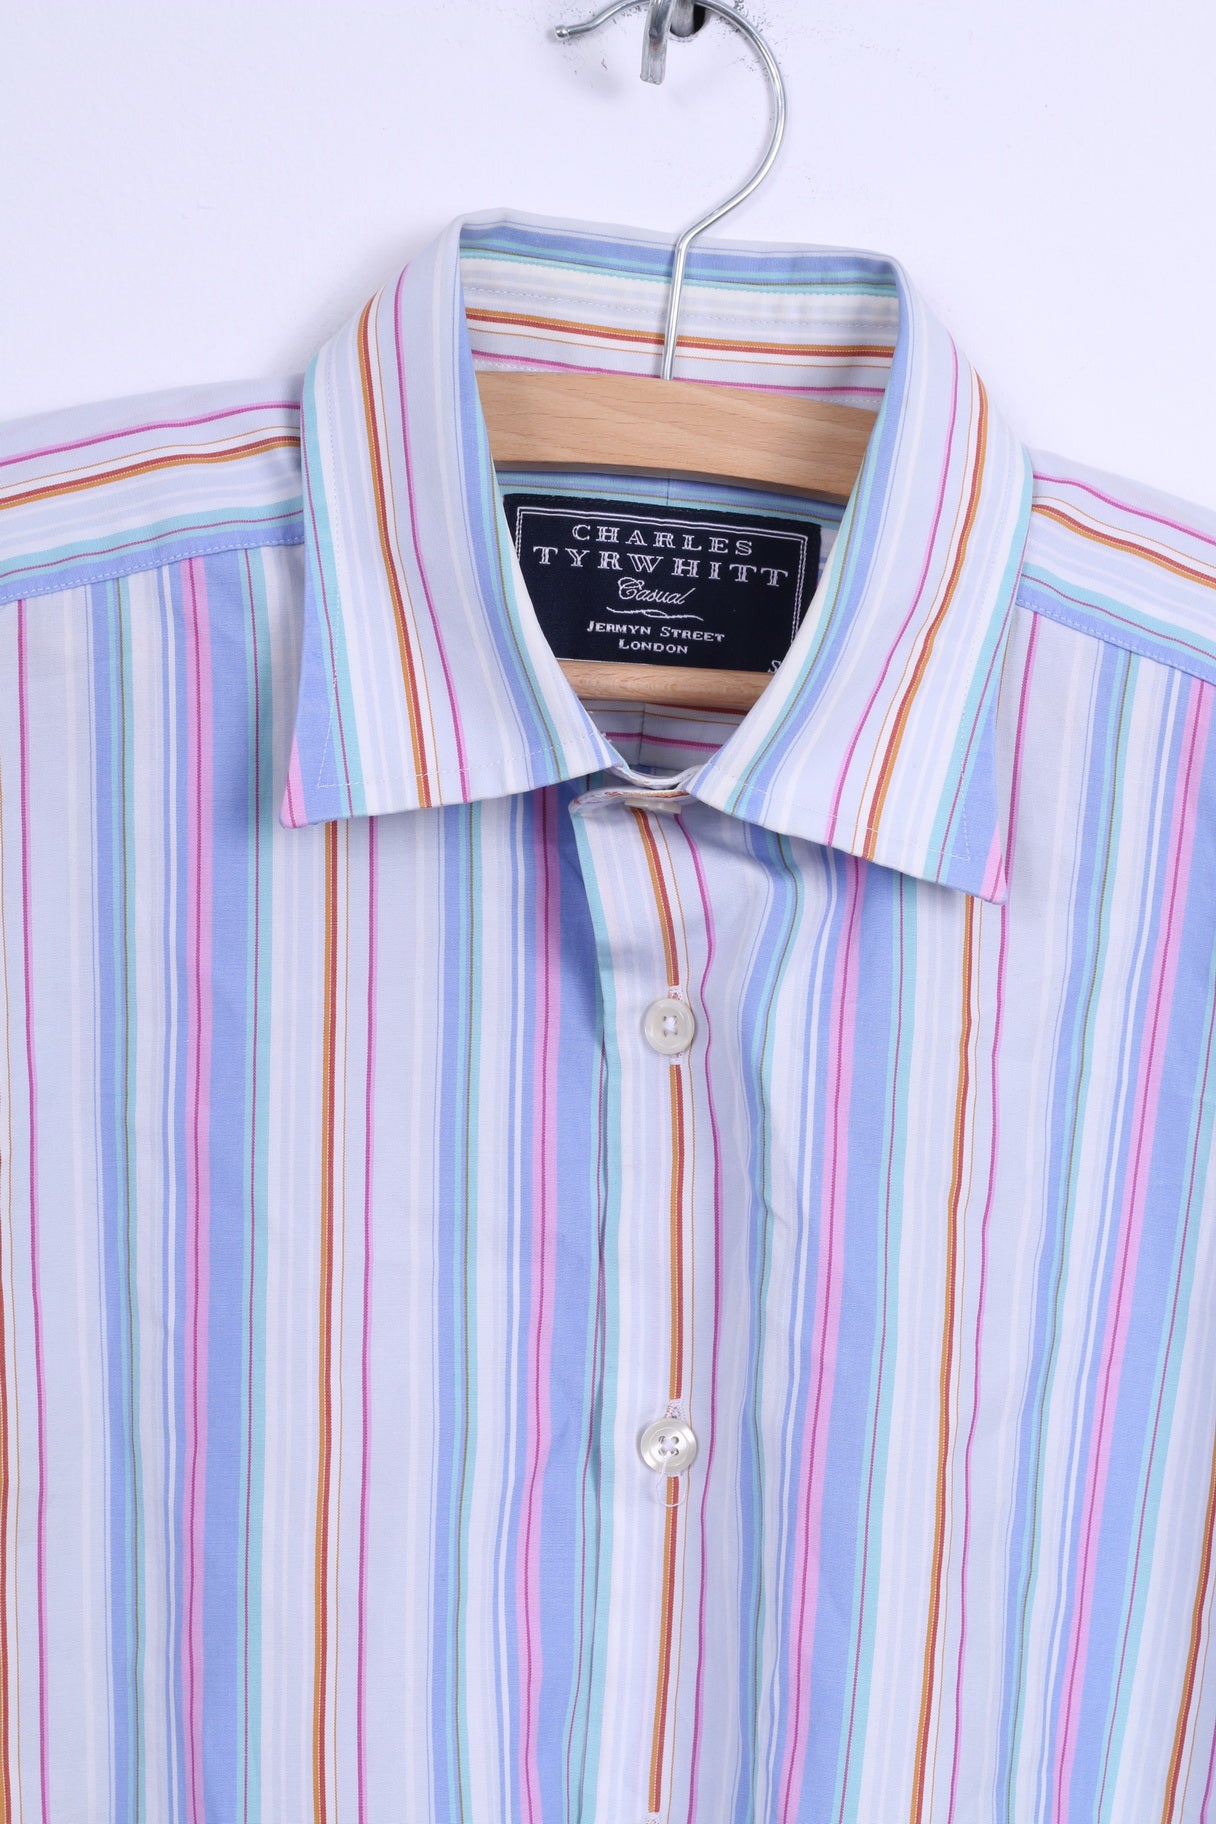 Charles Tyrwhitt Mens S Casual Shirt Cotton Blue Striped Long Sleeve